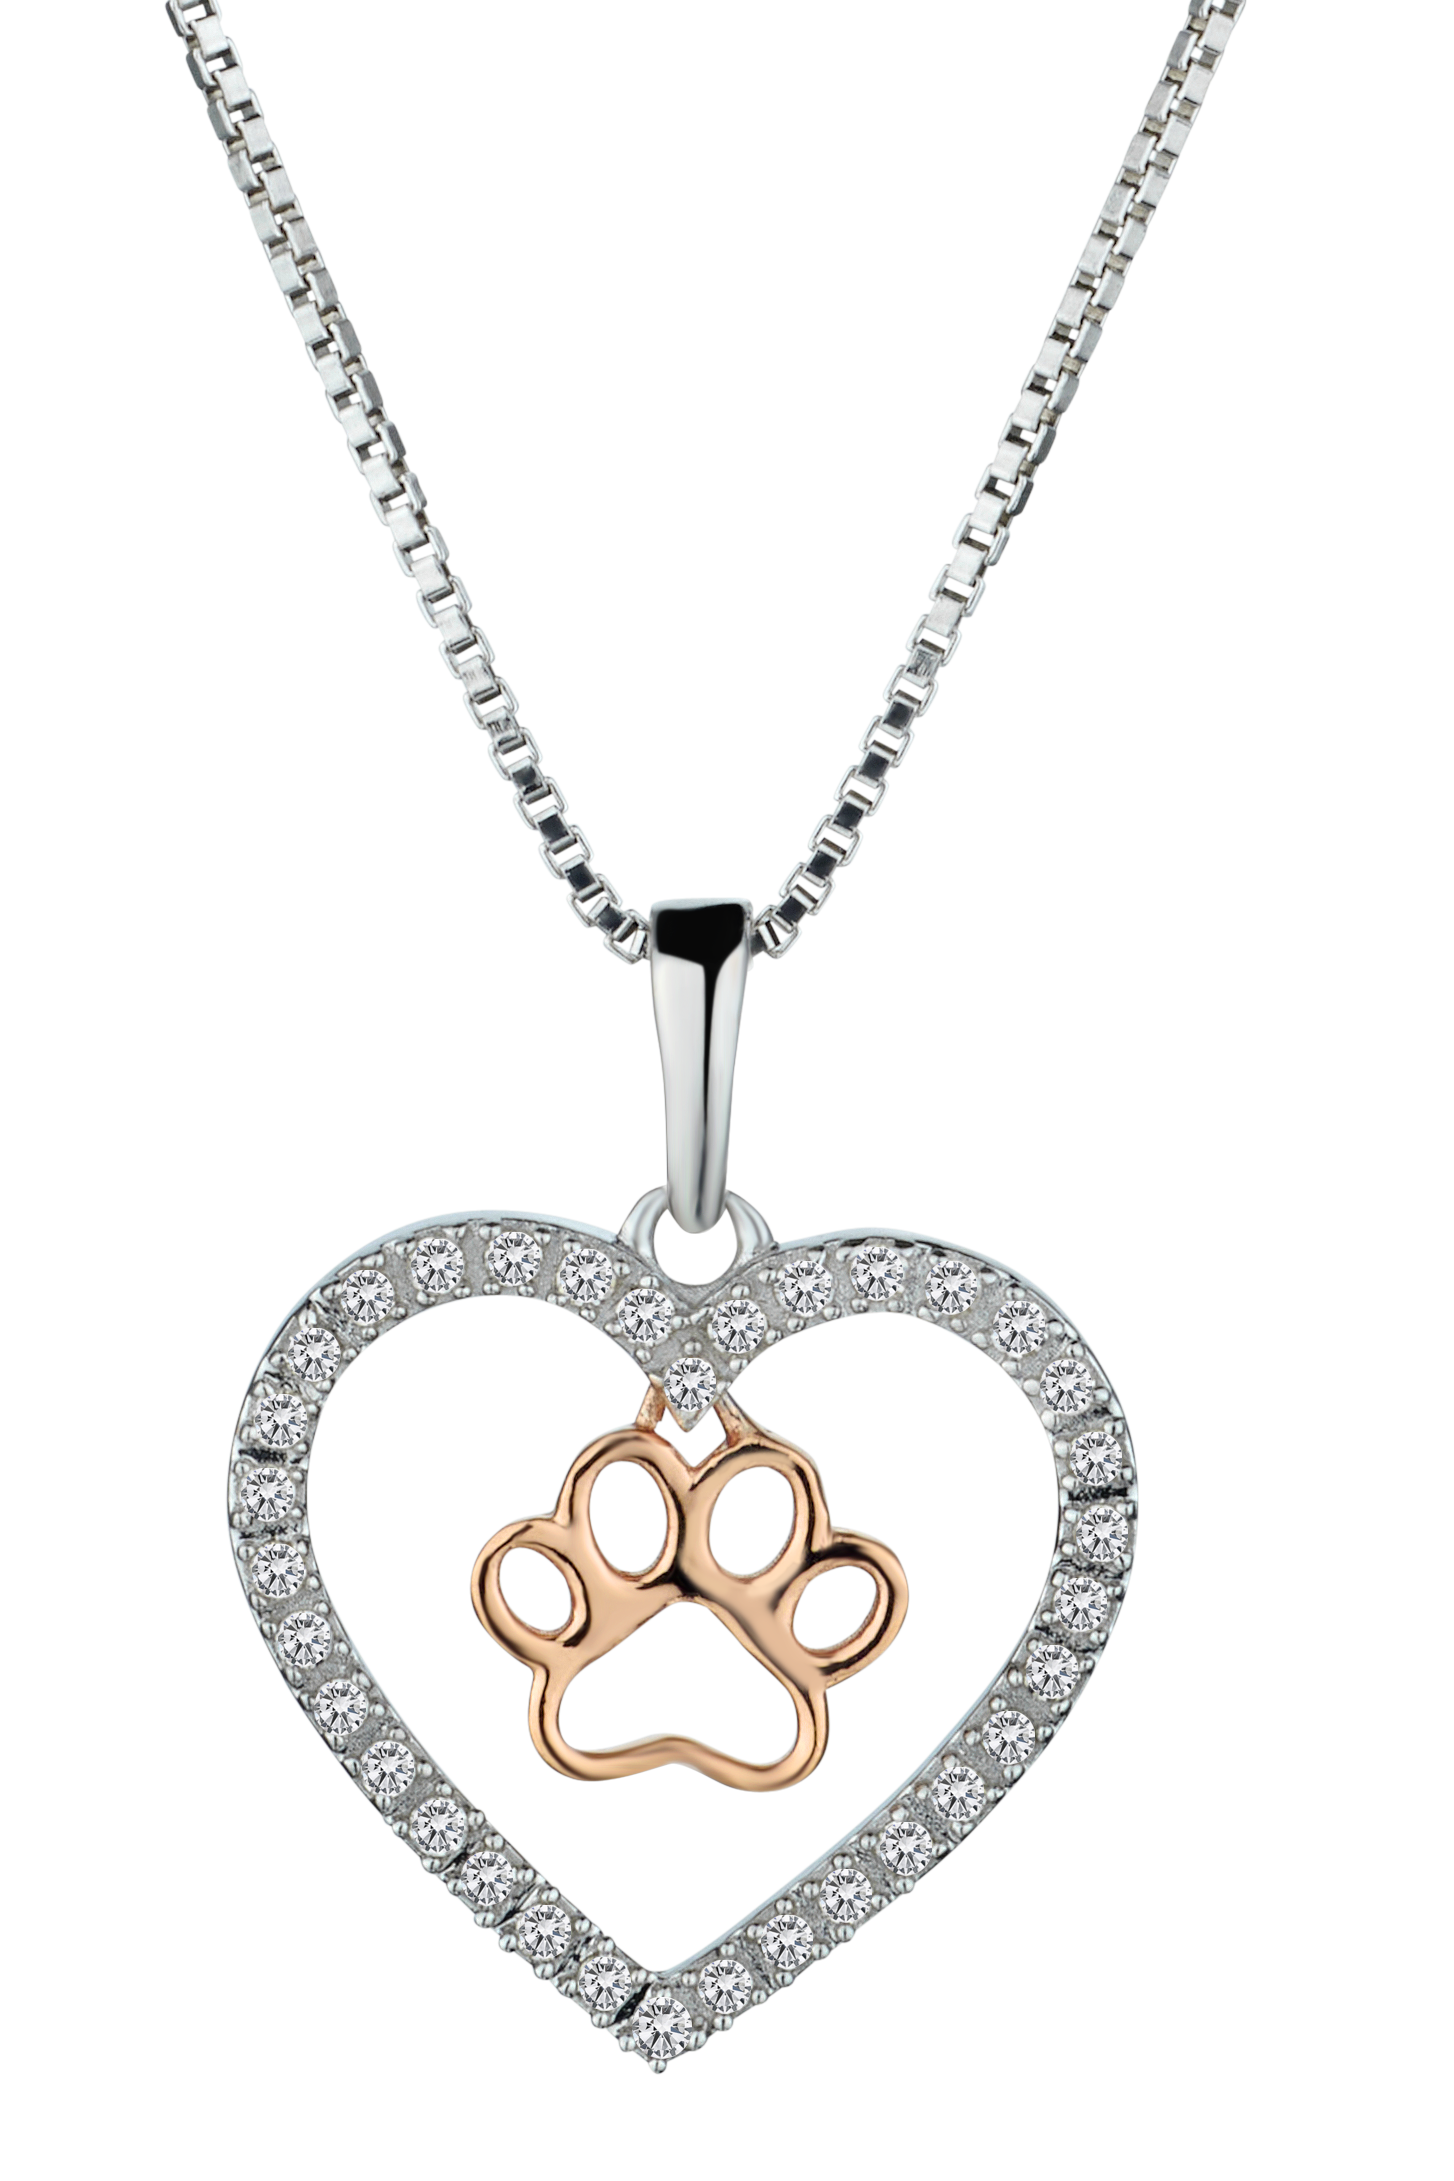 .11 Carat of Diamonds "Bear Paw" Heart Pendant, Silver.....................NOW